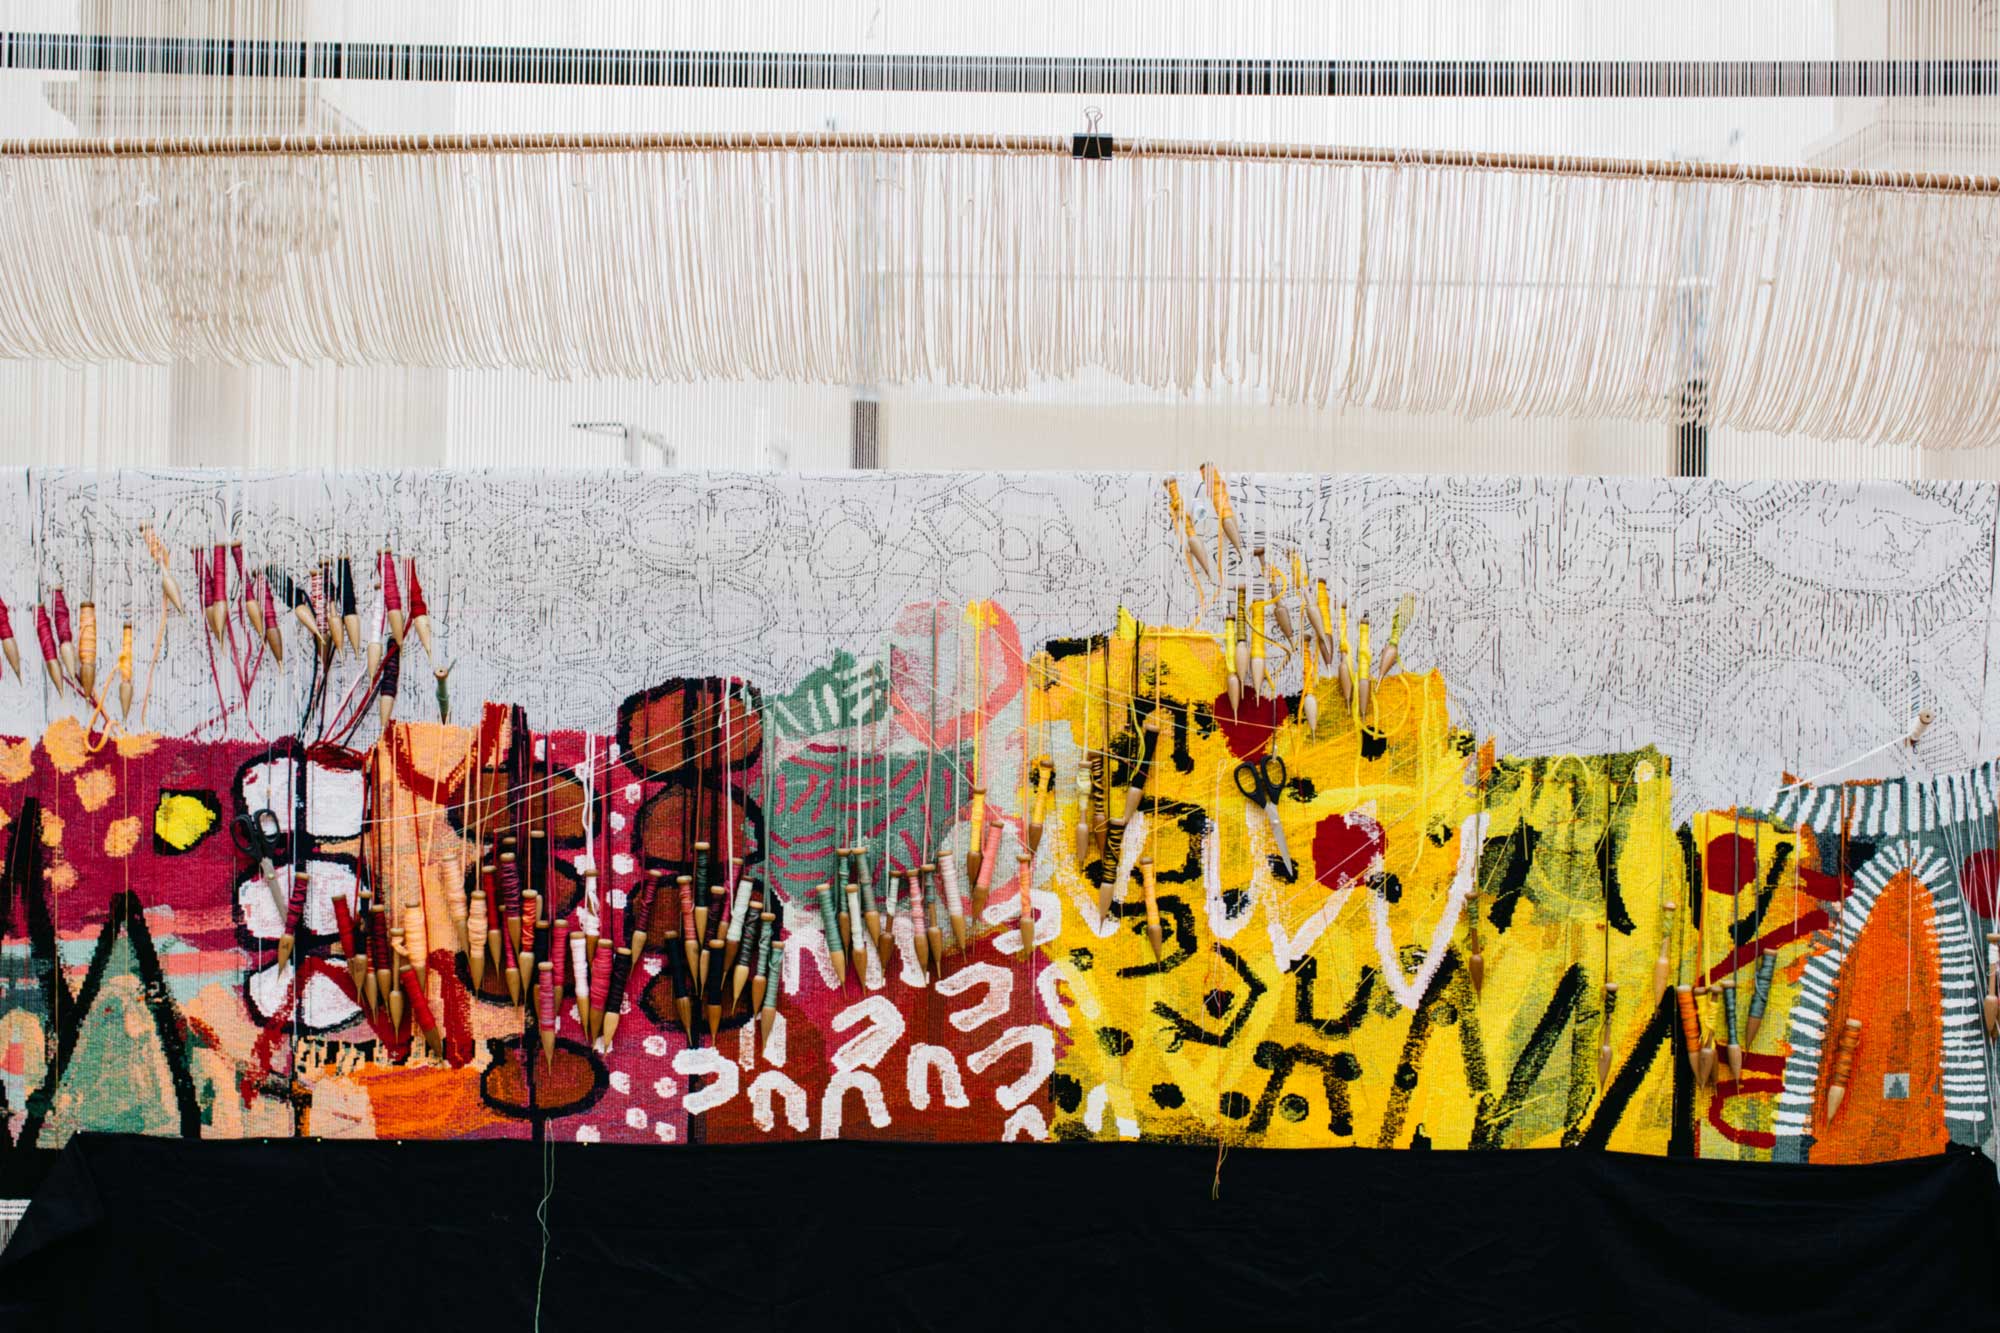 On the loom: 'The Royal Harvest' tapestry in progress, designed by Naomi Hobson and woven by Pamela Joyce, Sue Batten, Tim Gresham & Jennifer Sharpe. Photo: Marie-Luise Skibbe.